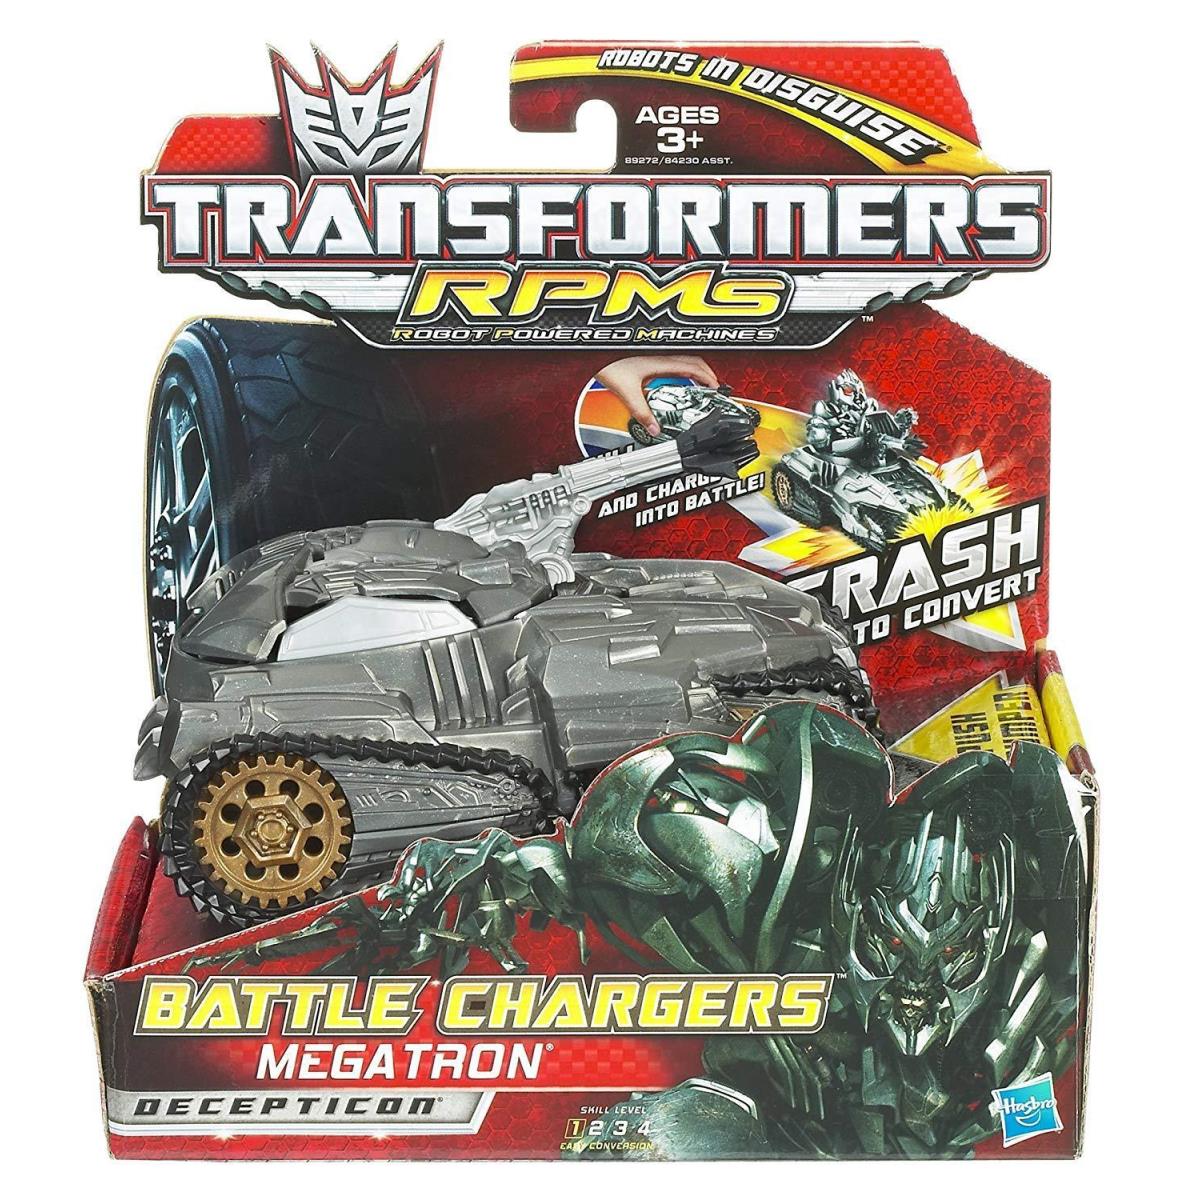 Transformers Movie Cyberslammer Battle Charger - Megatron Decepticon Vehicle